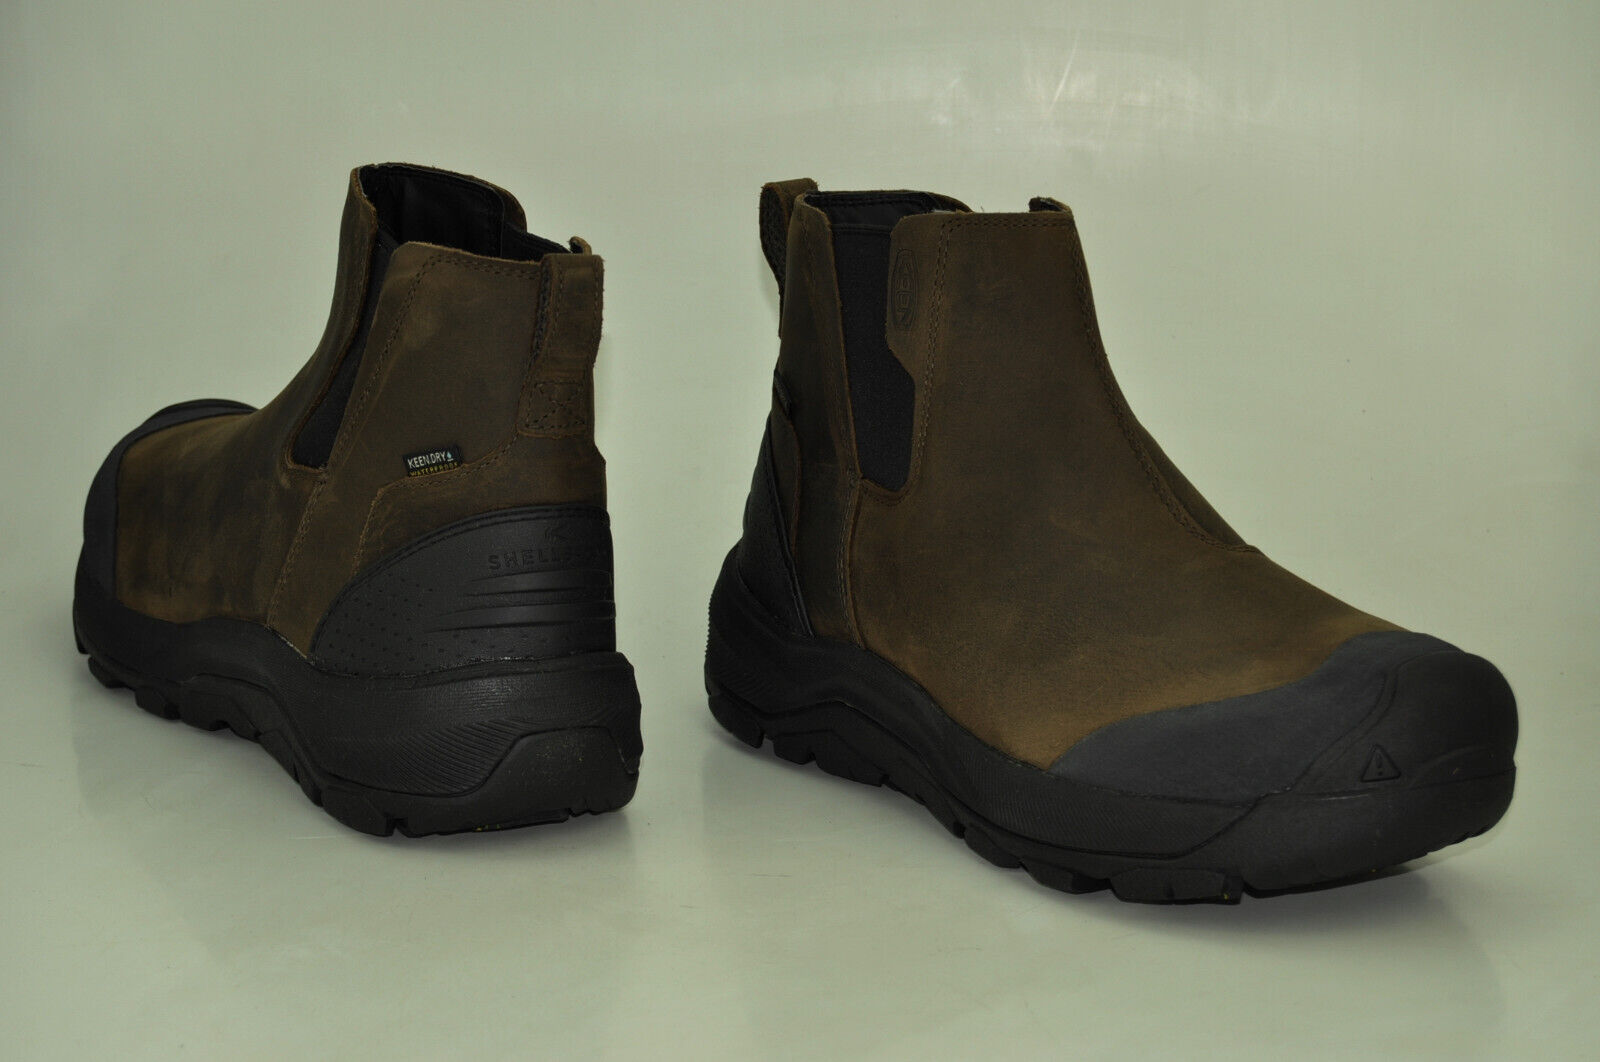 KEEN Revel IV Chelsea Boots Stiefel Waterproof Outdoorschuhe Herren Schuhgröße EUR 41 - UK 7,5 - US 8,5